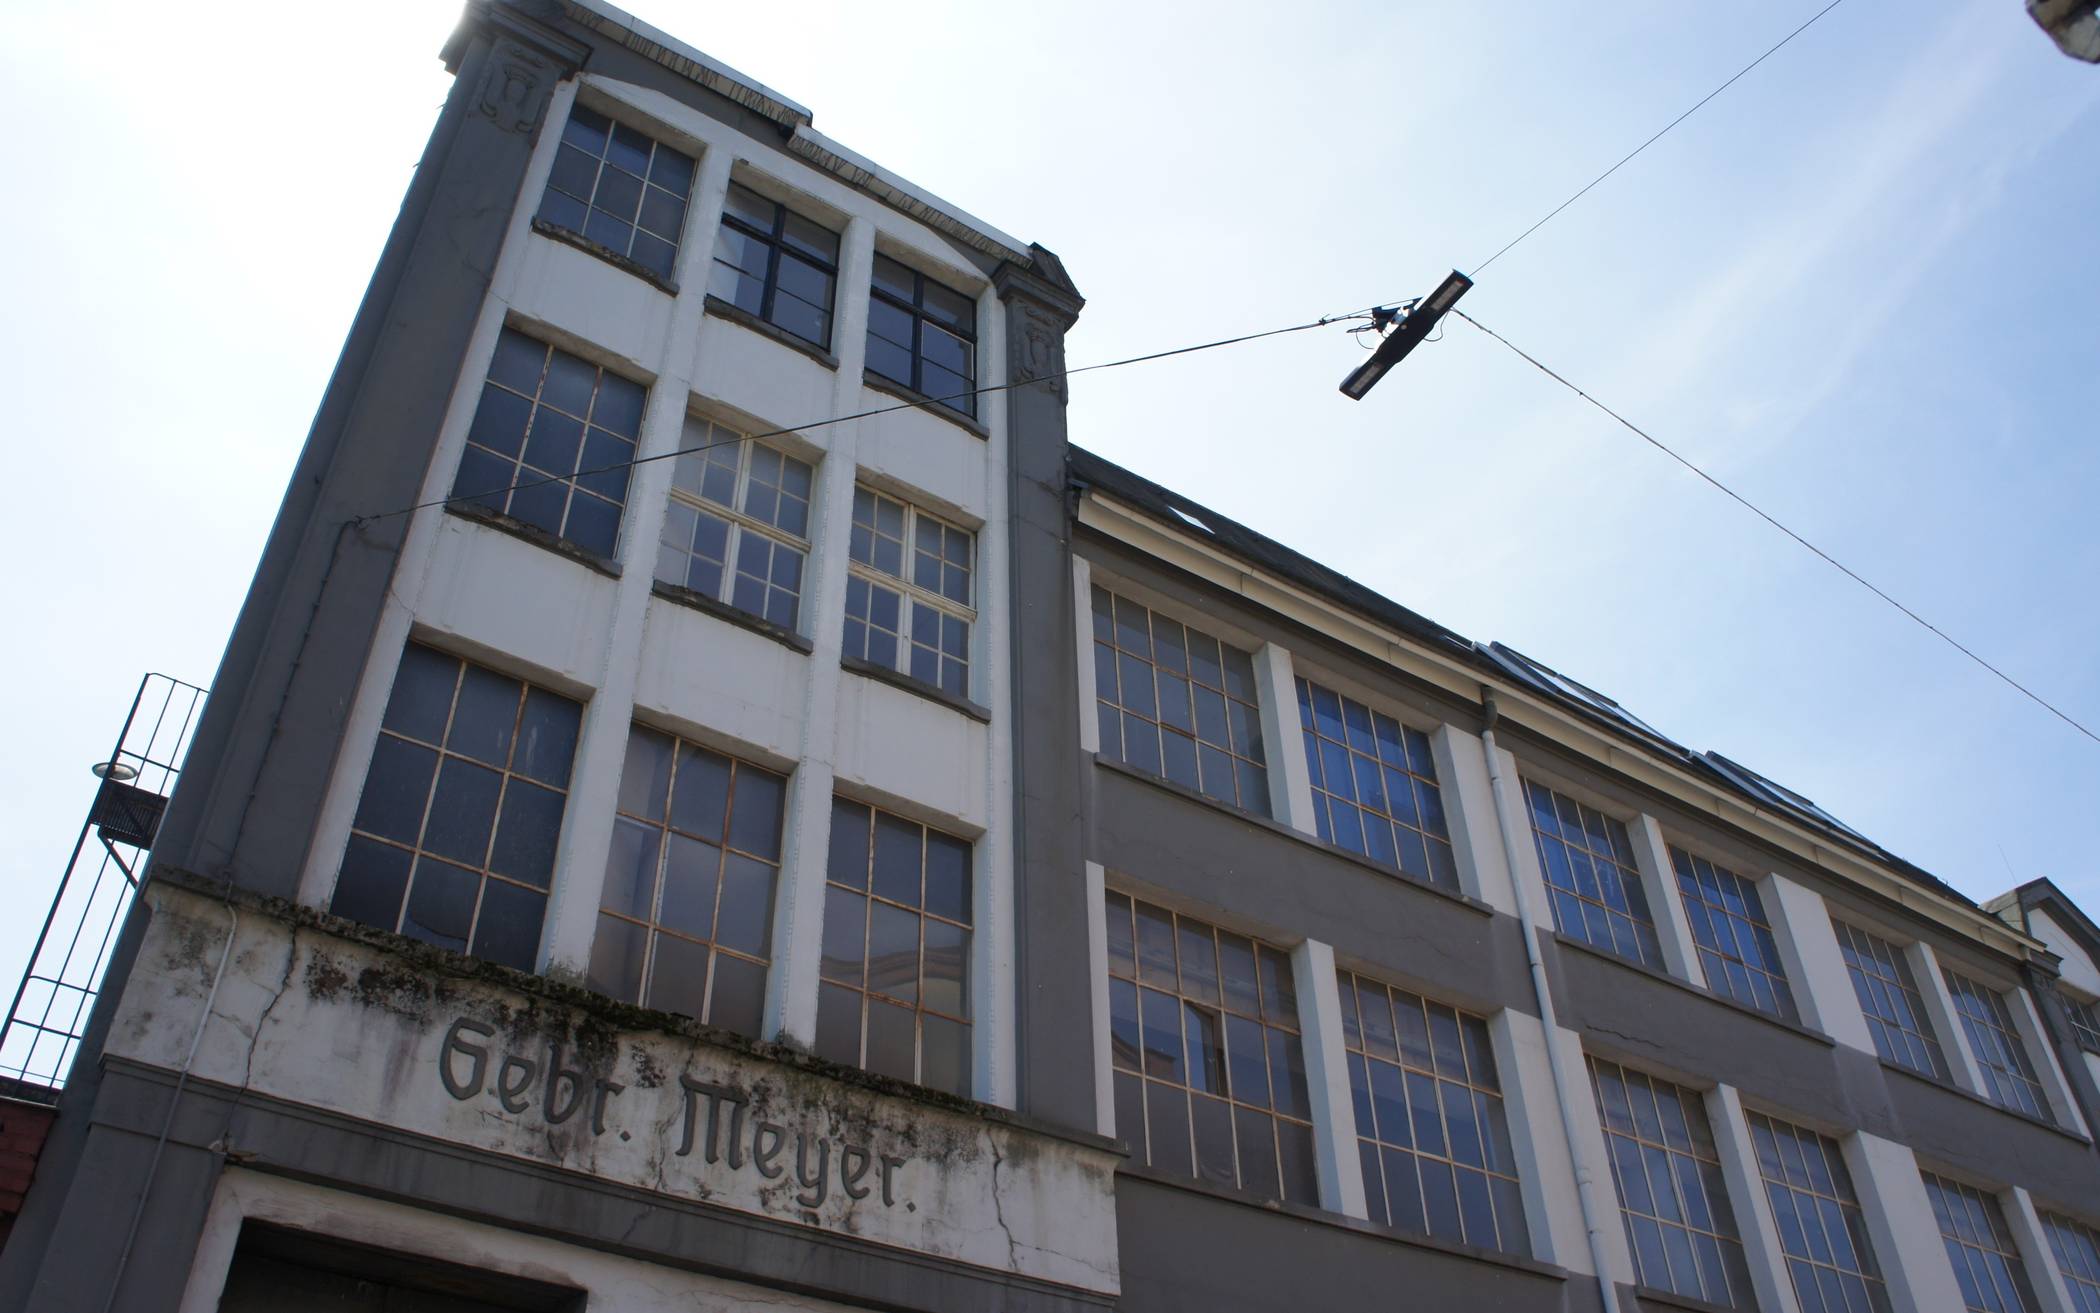 Die alte Fabrik „Gebr. Meyer“.